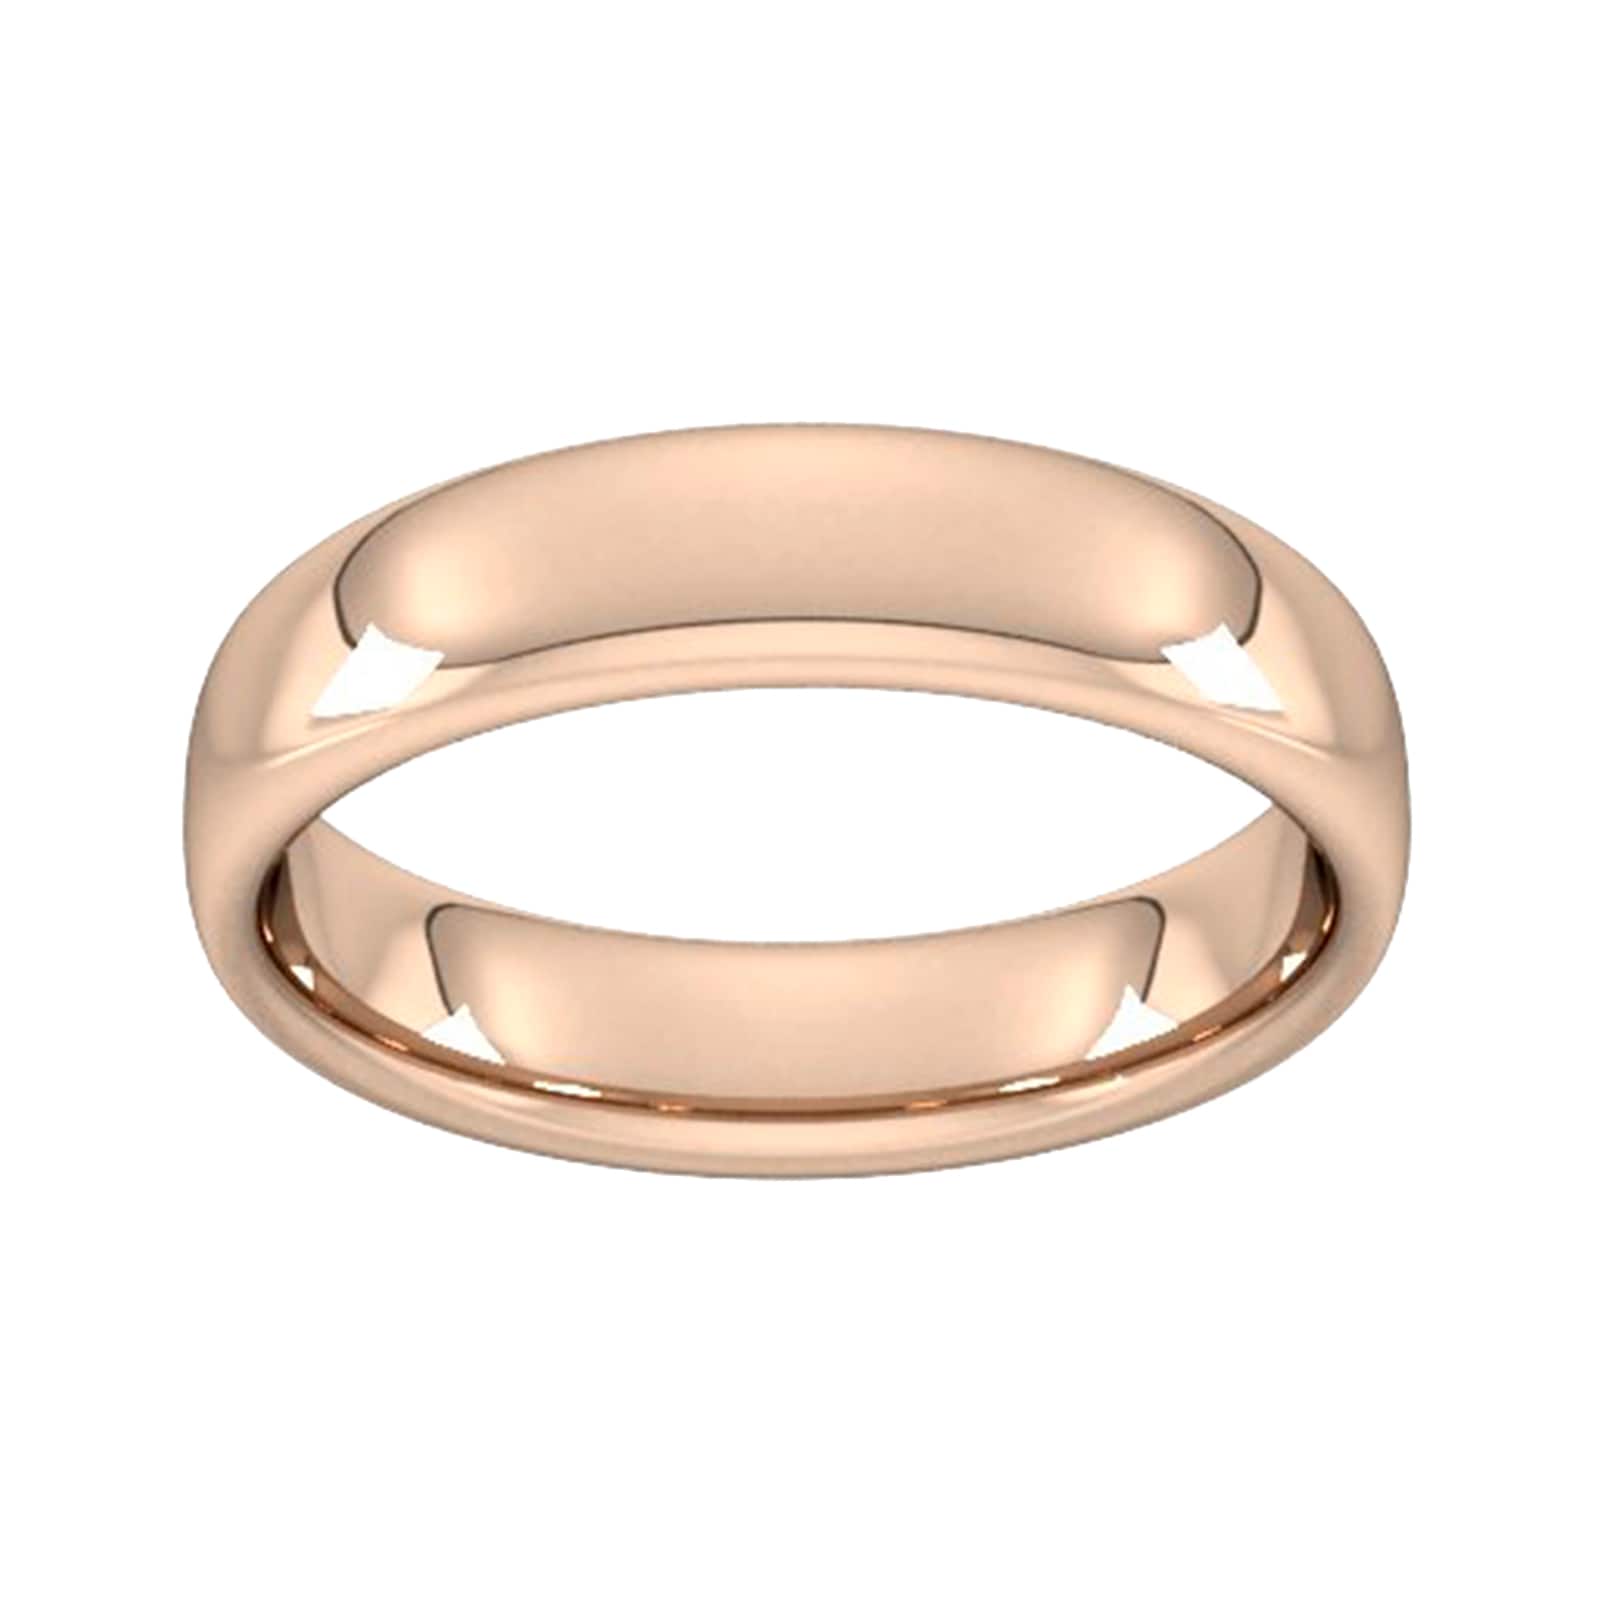 5mm Slight Court Heavy Wedding Ring In 18 Carat Rose Gold - Ring Size J